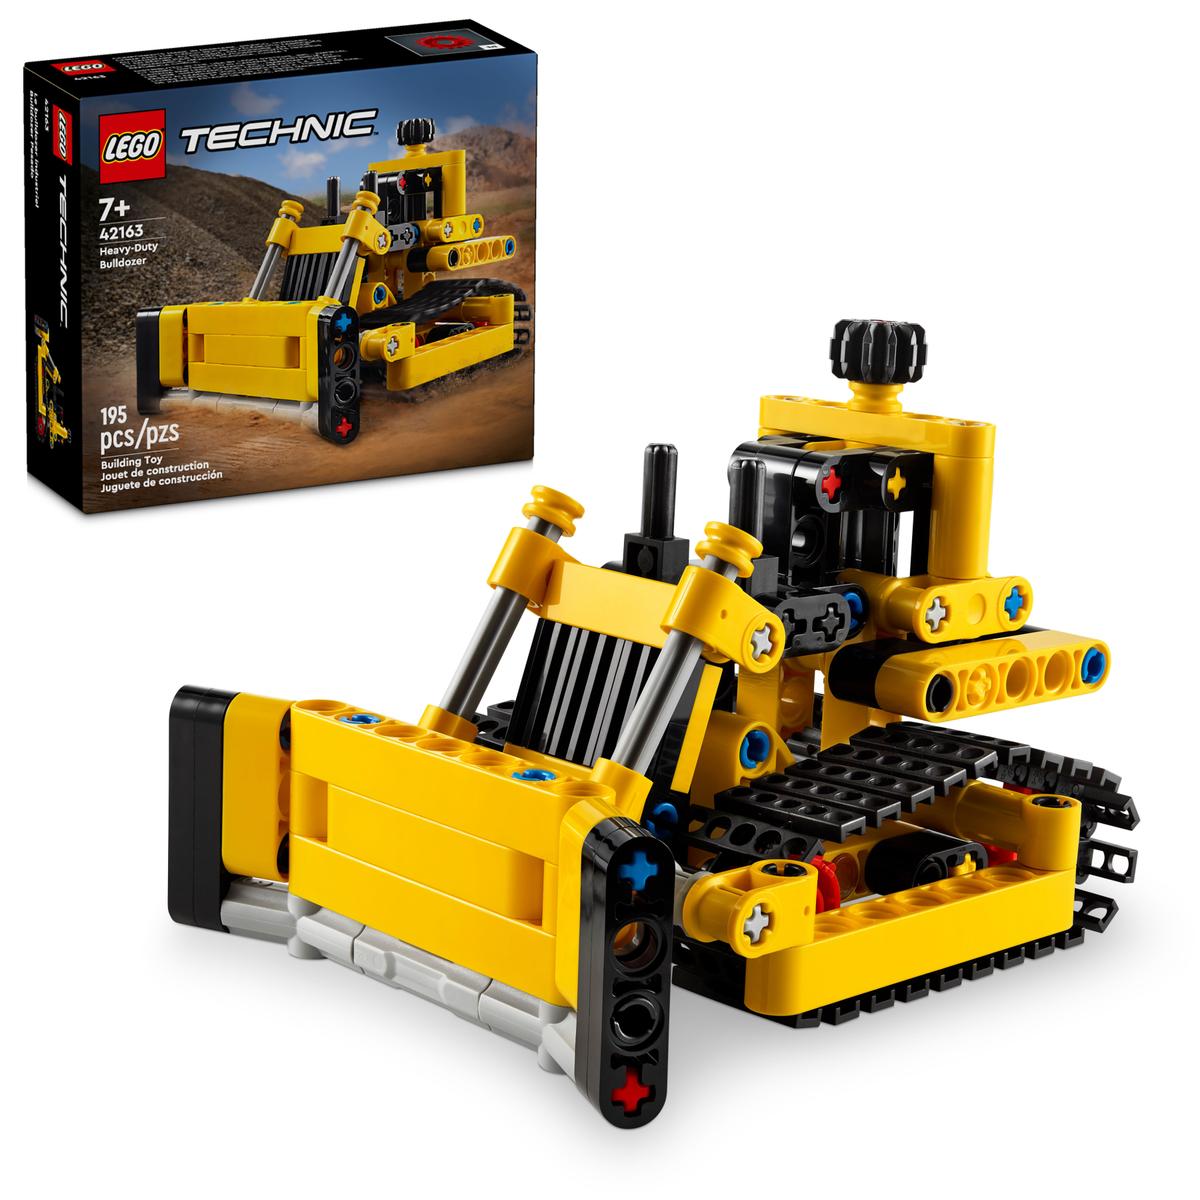 Lego Technic 42163 - Schwerlast Bulldozer